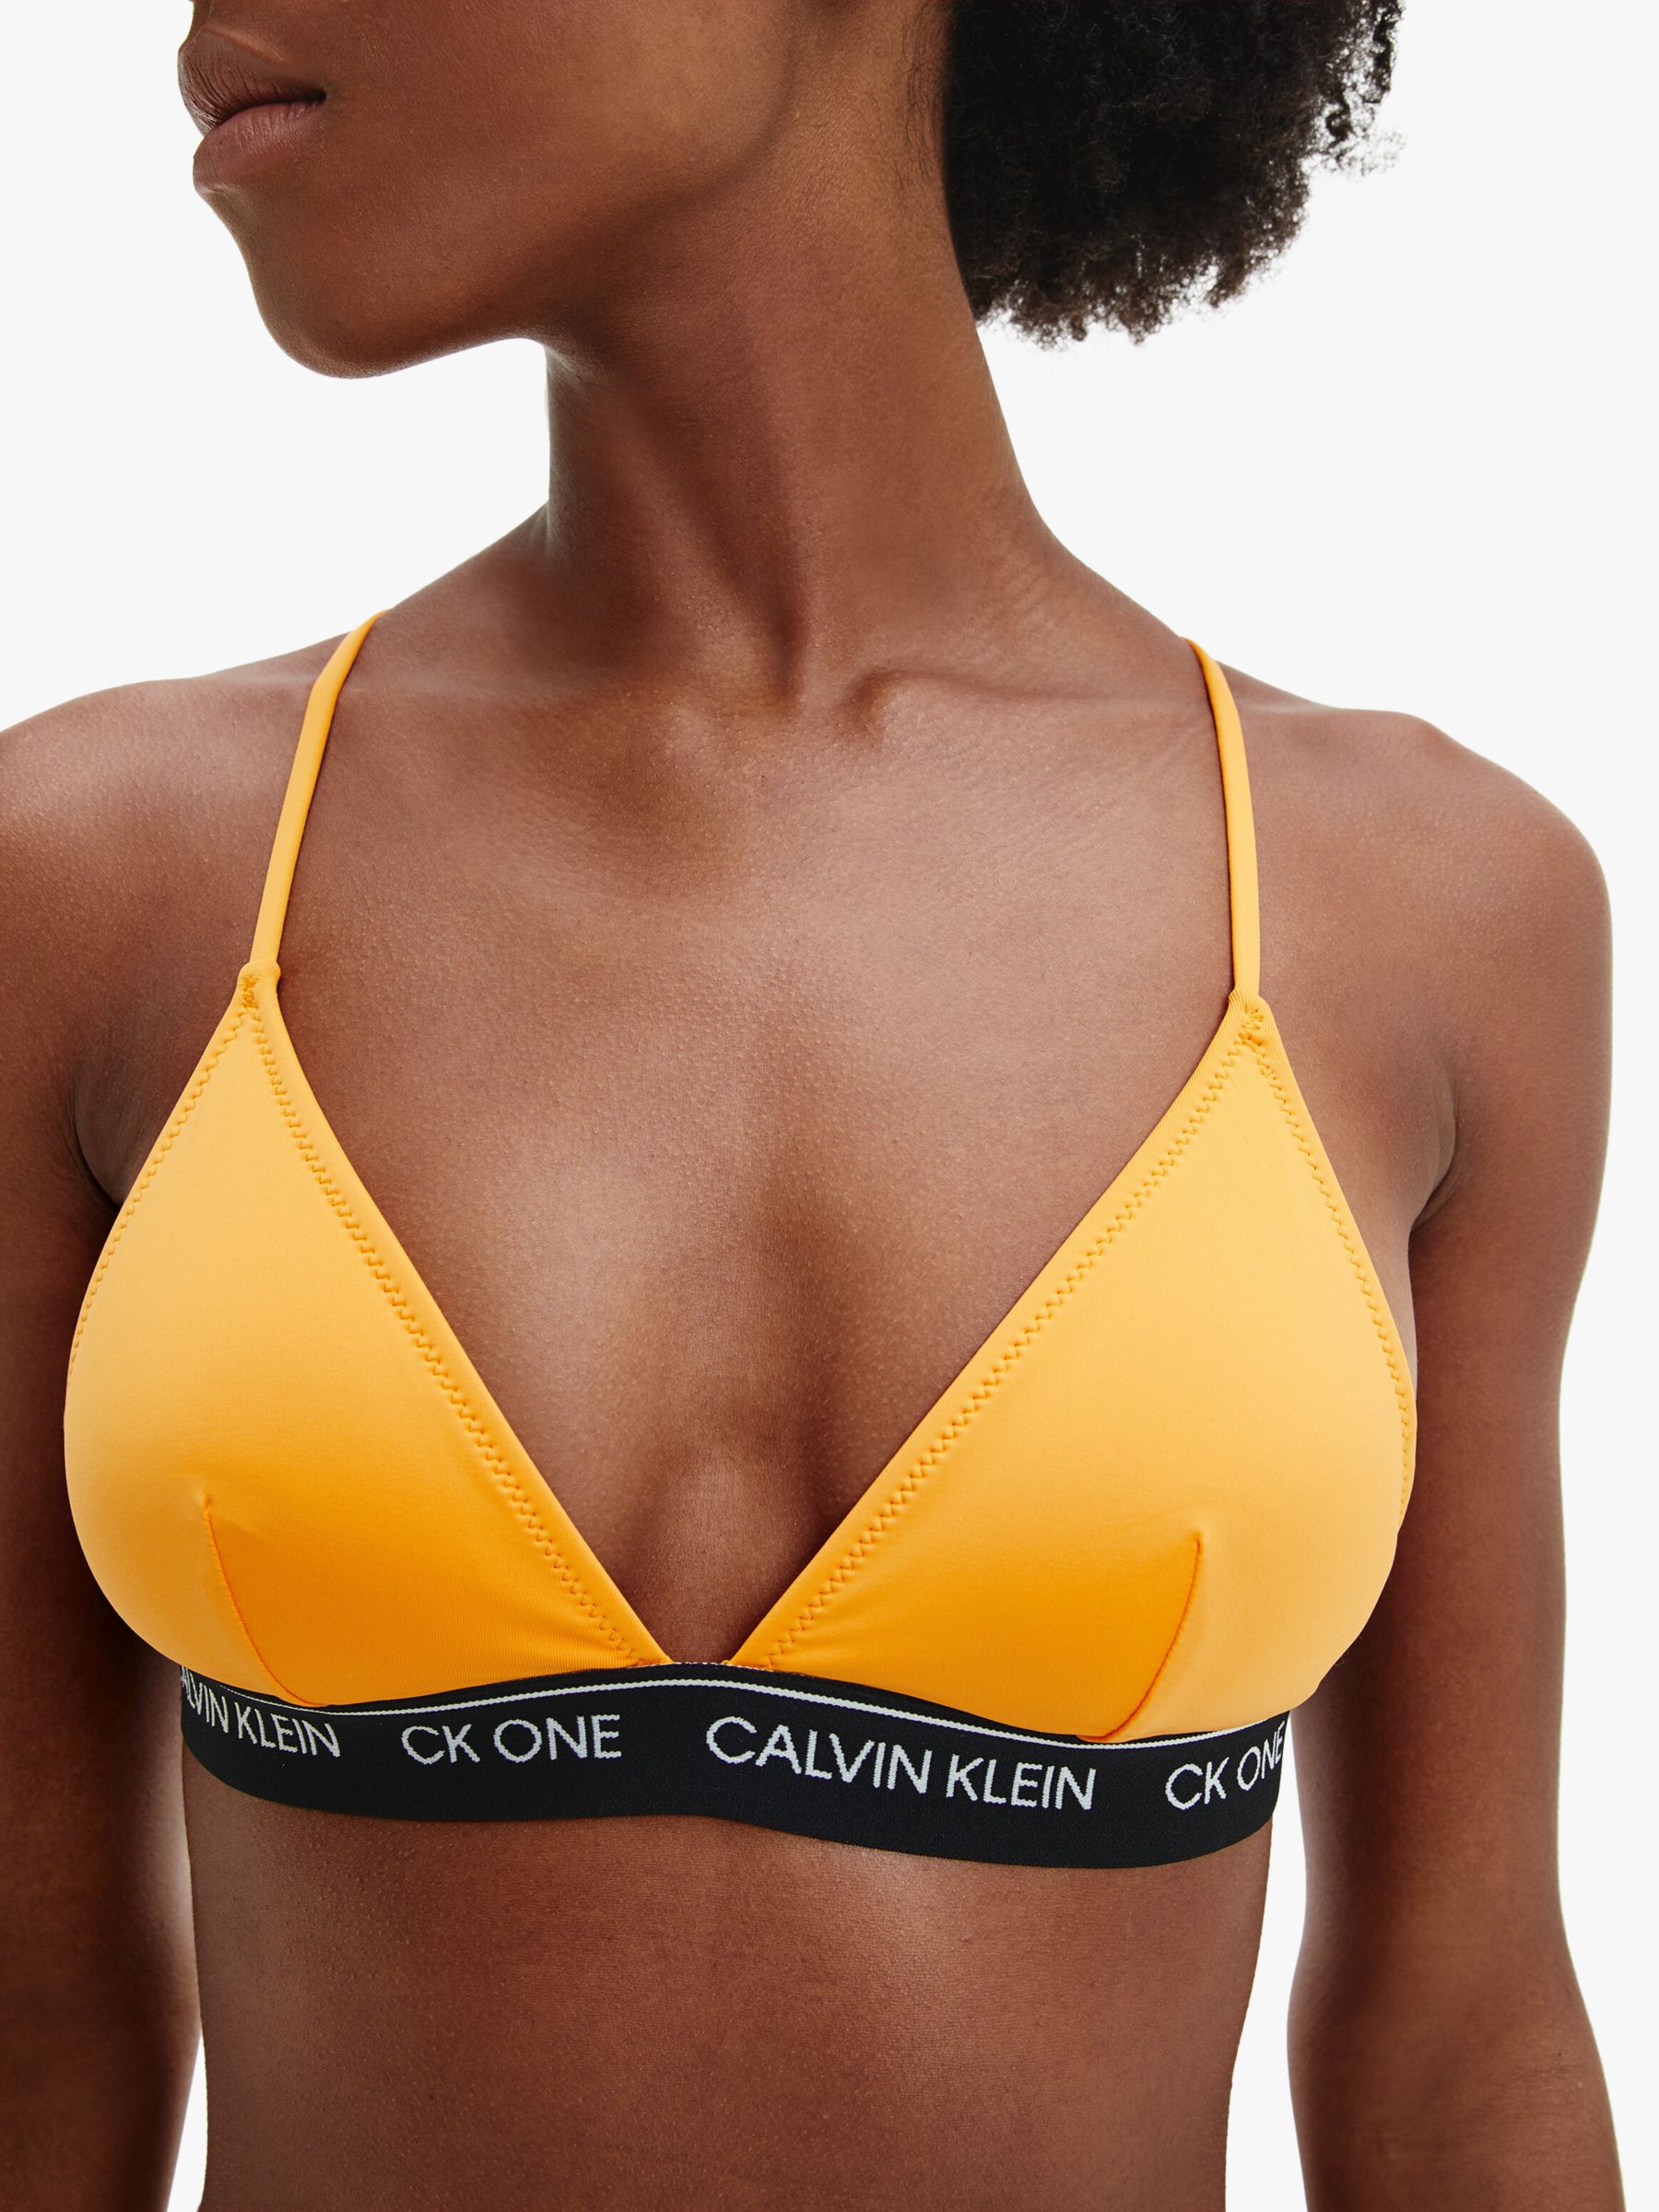 Shilling Hoge blootstelling Gooey Calvin Klein CK One Triangle Bikini Top, Sunrise Orange